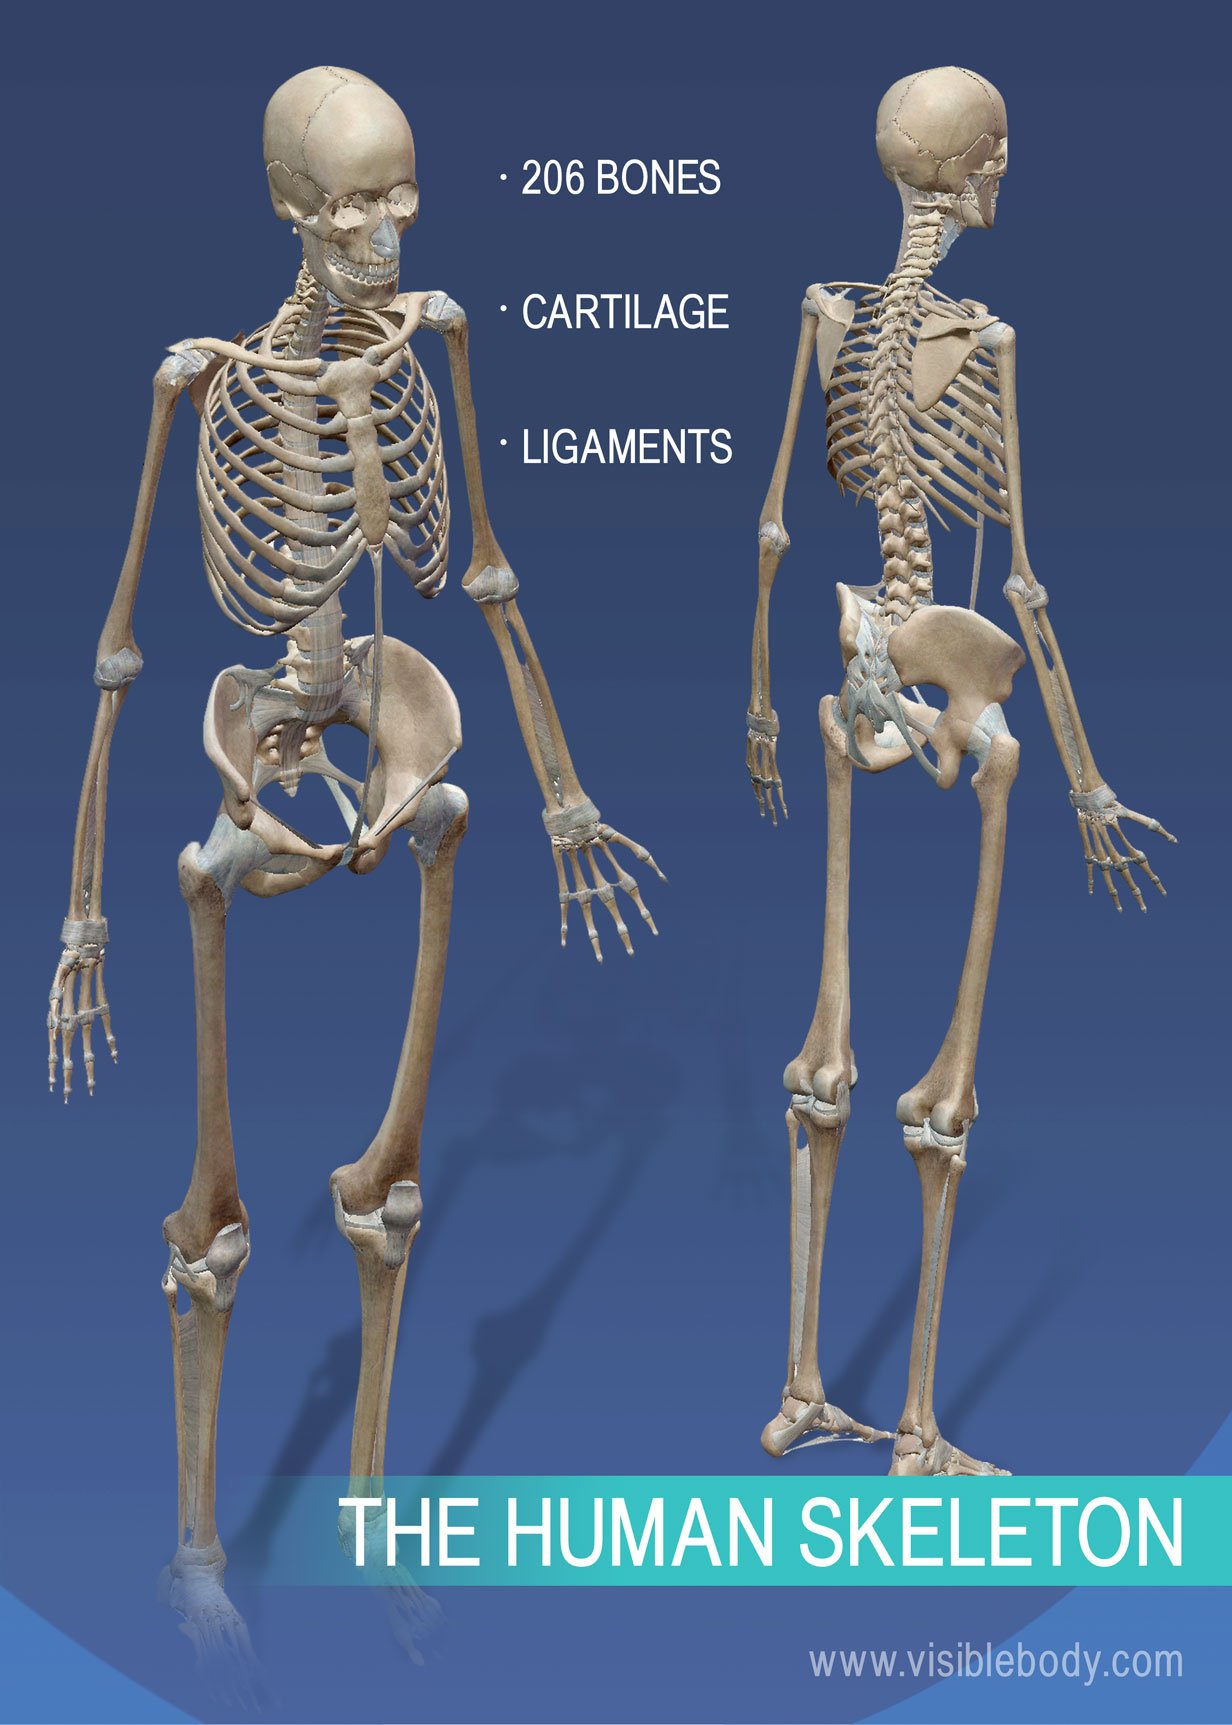 human leg bone structure